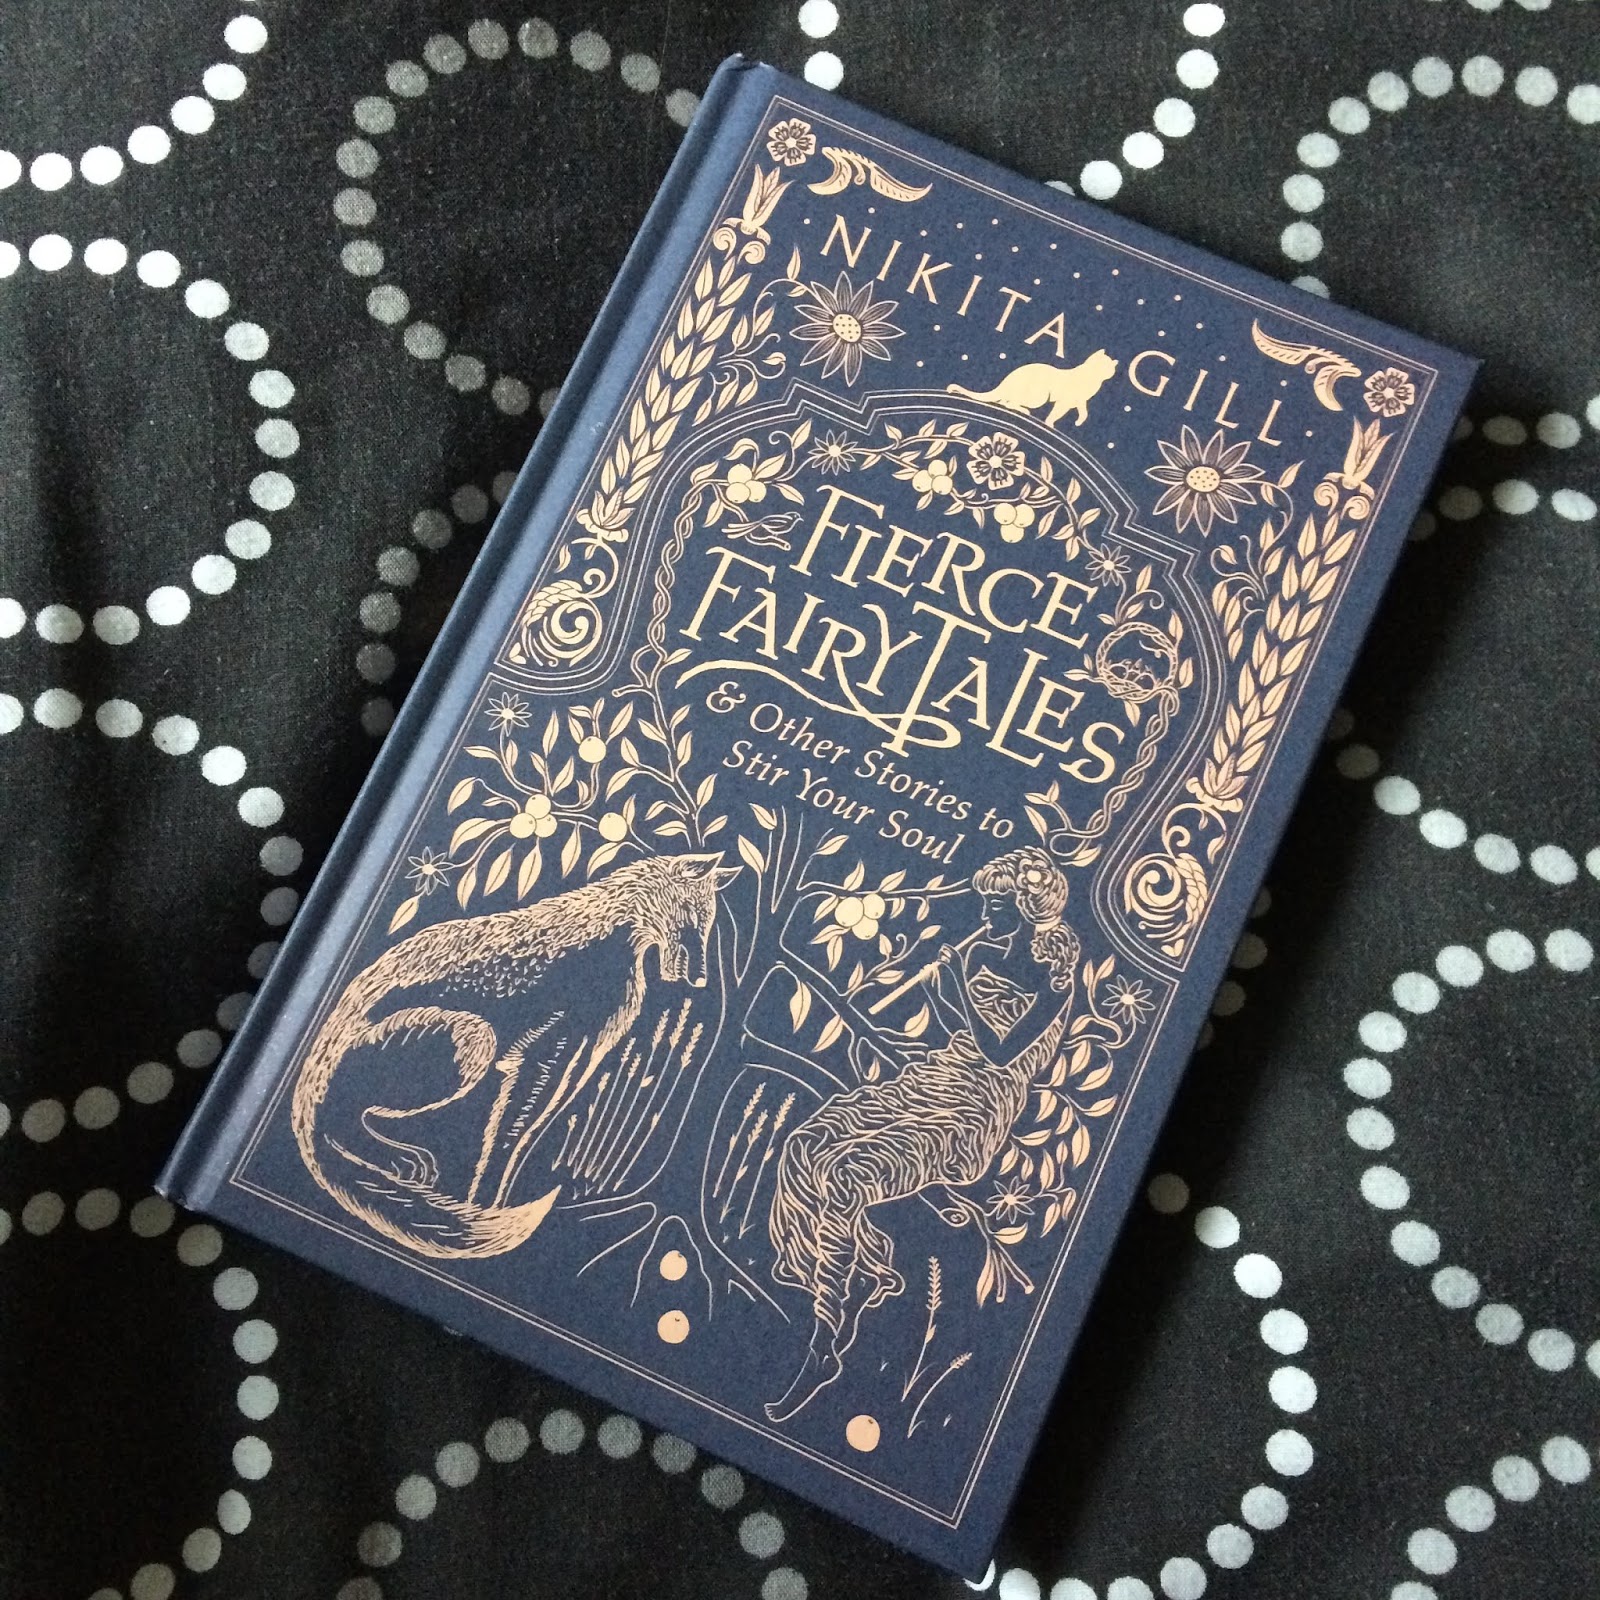 Fierce Fairytales by Nikita Gill